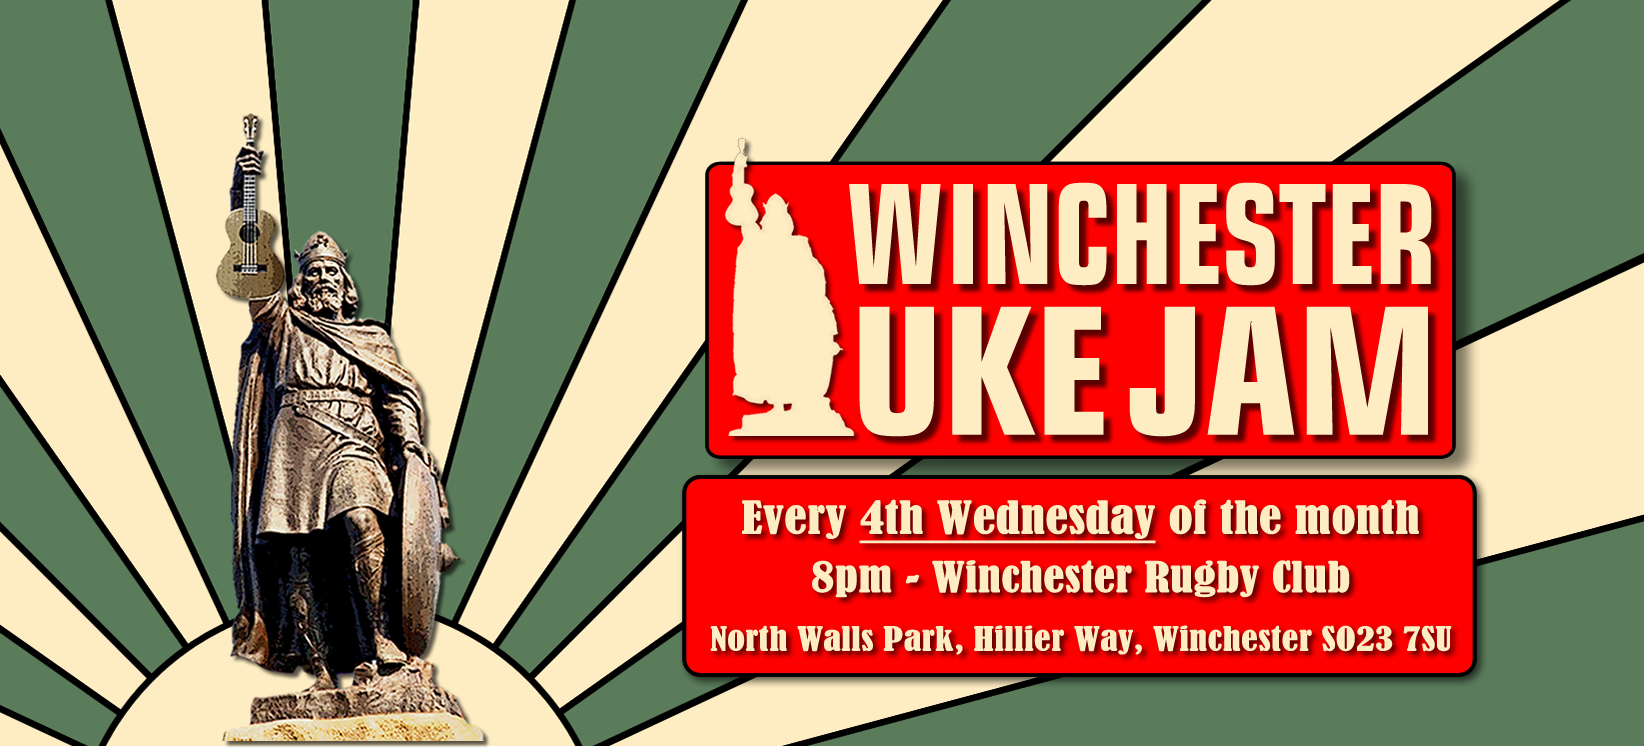 Winchester Uke Jam Christmas Show